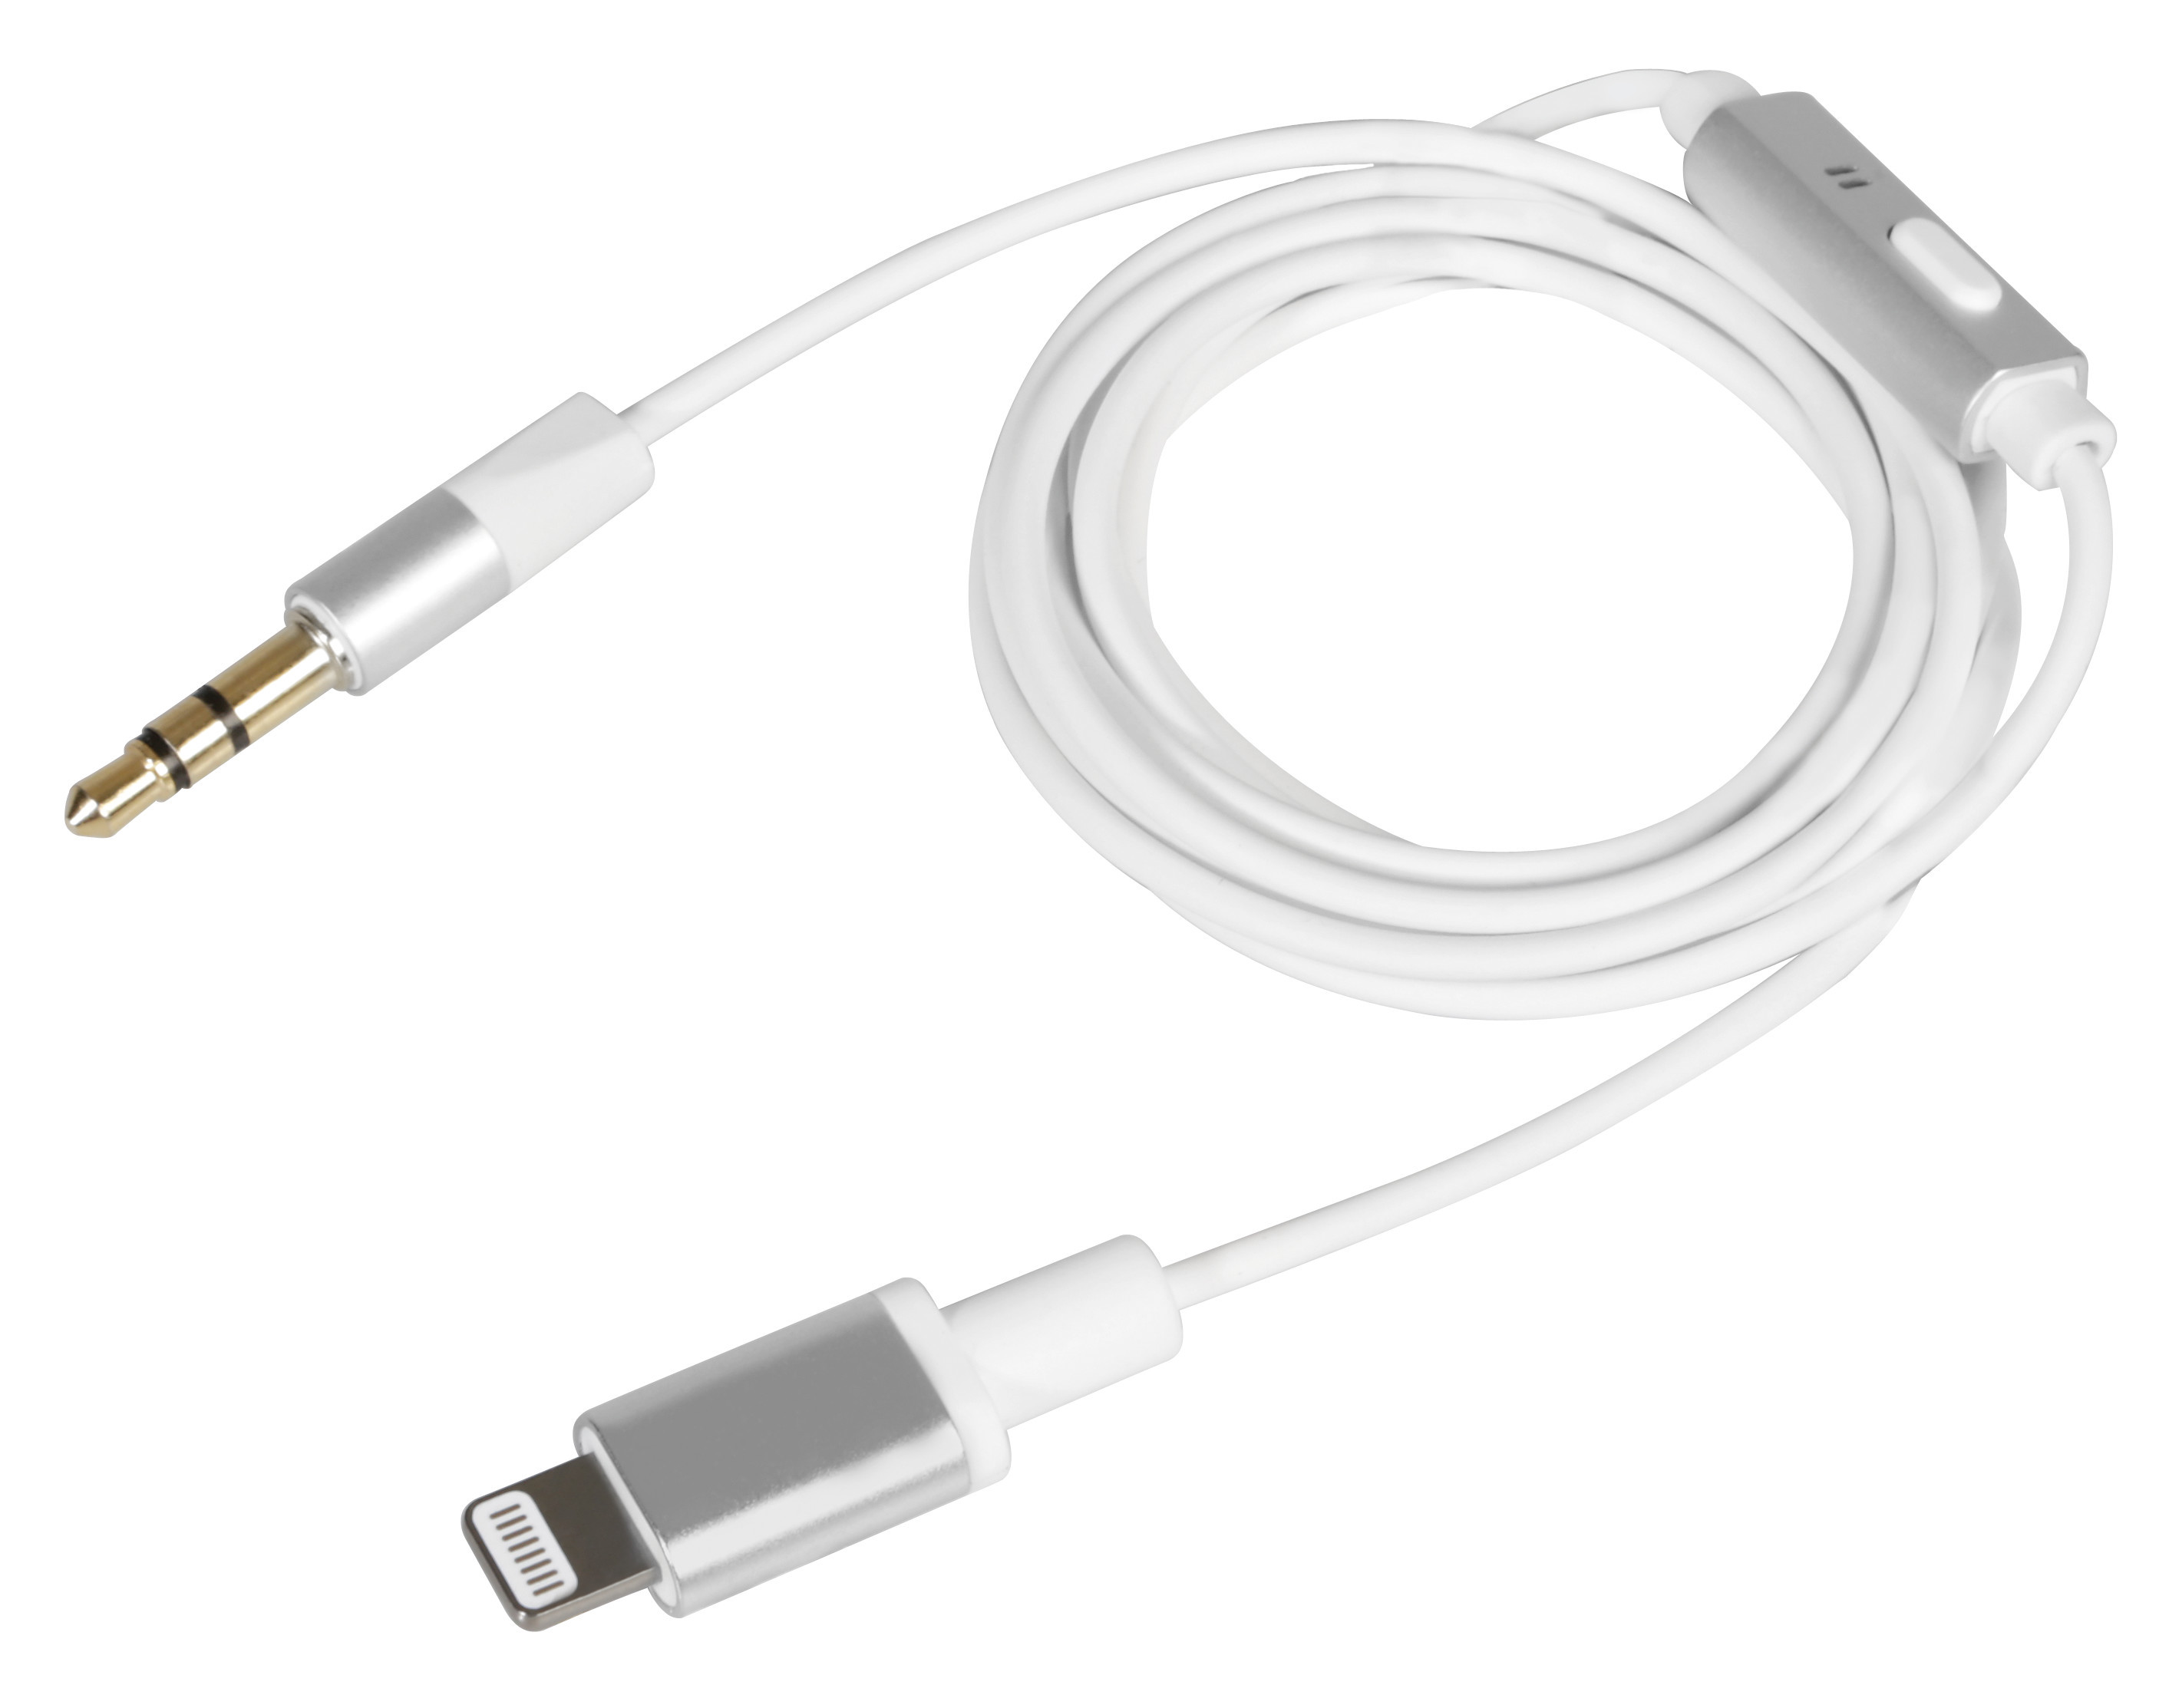 Cablu AUX cu microfon Apple 8 pini cu Bluetooth thumb